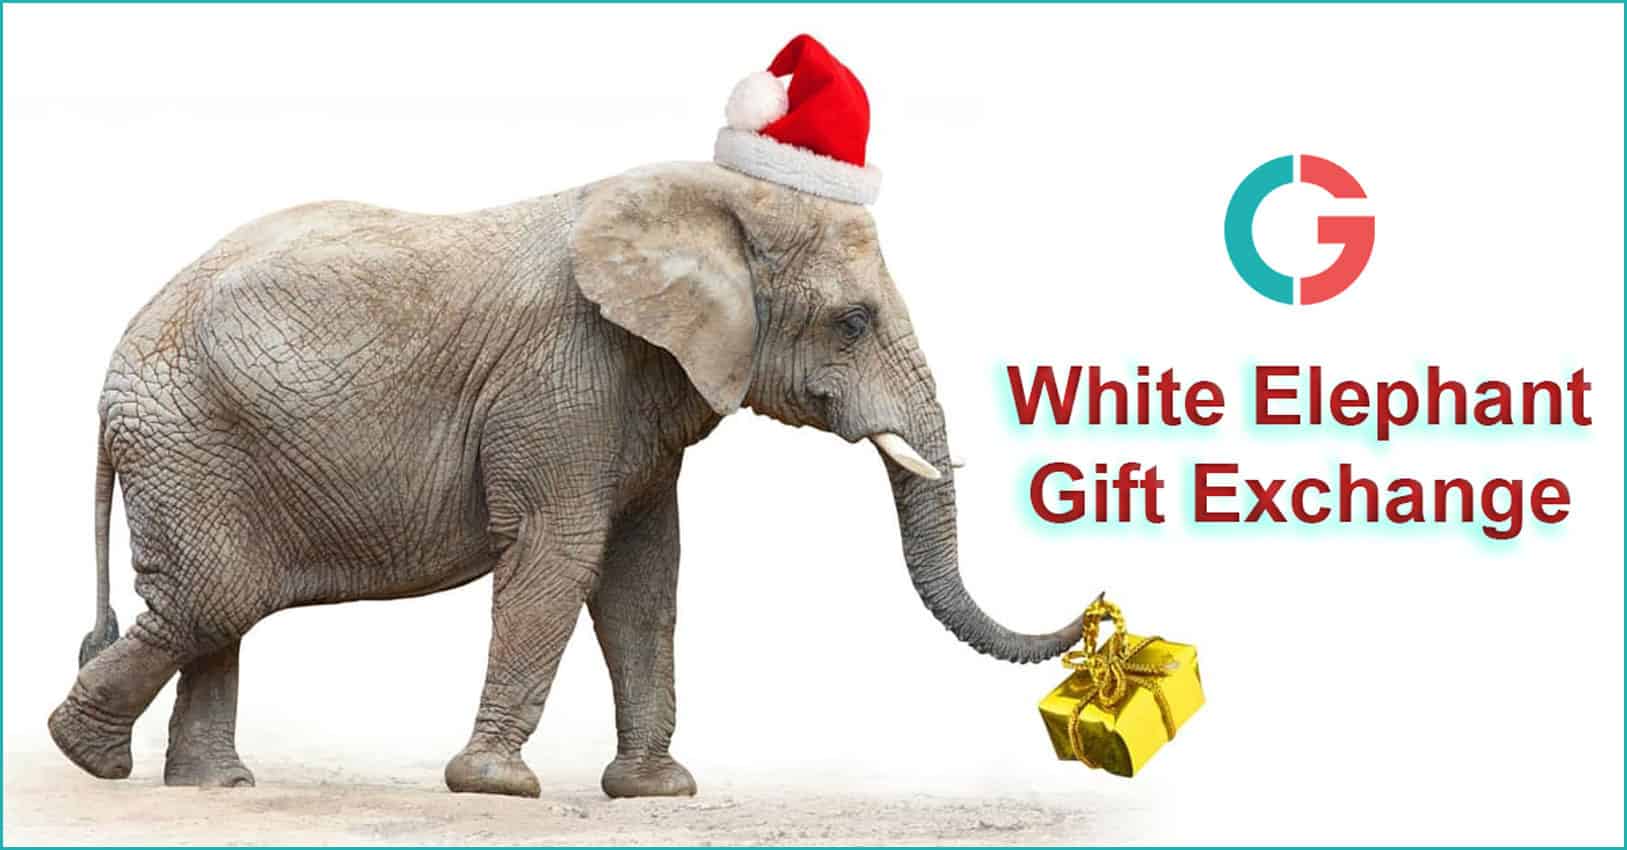 Where Did the Popular White Elephant Gift Exchange Originate?